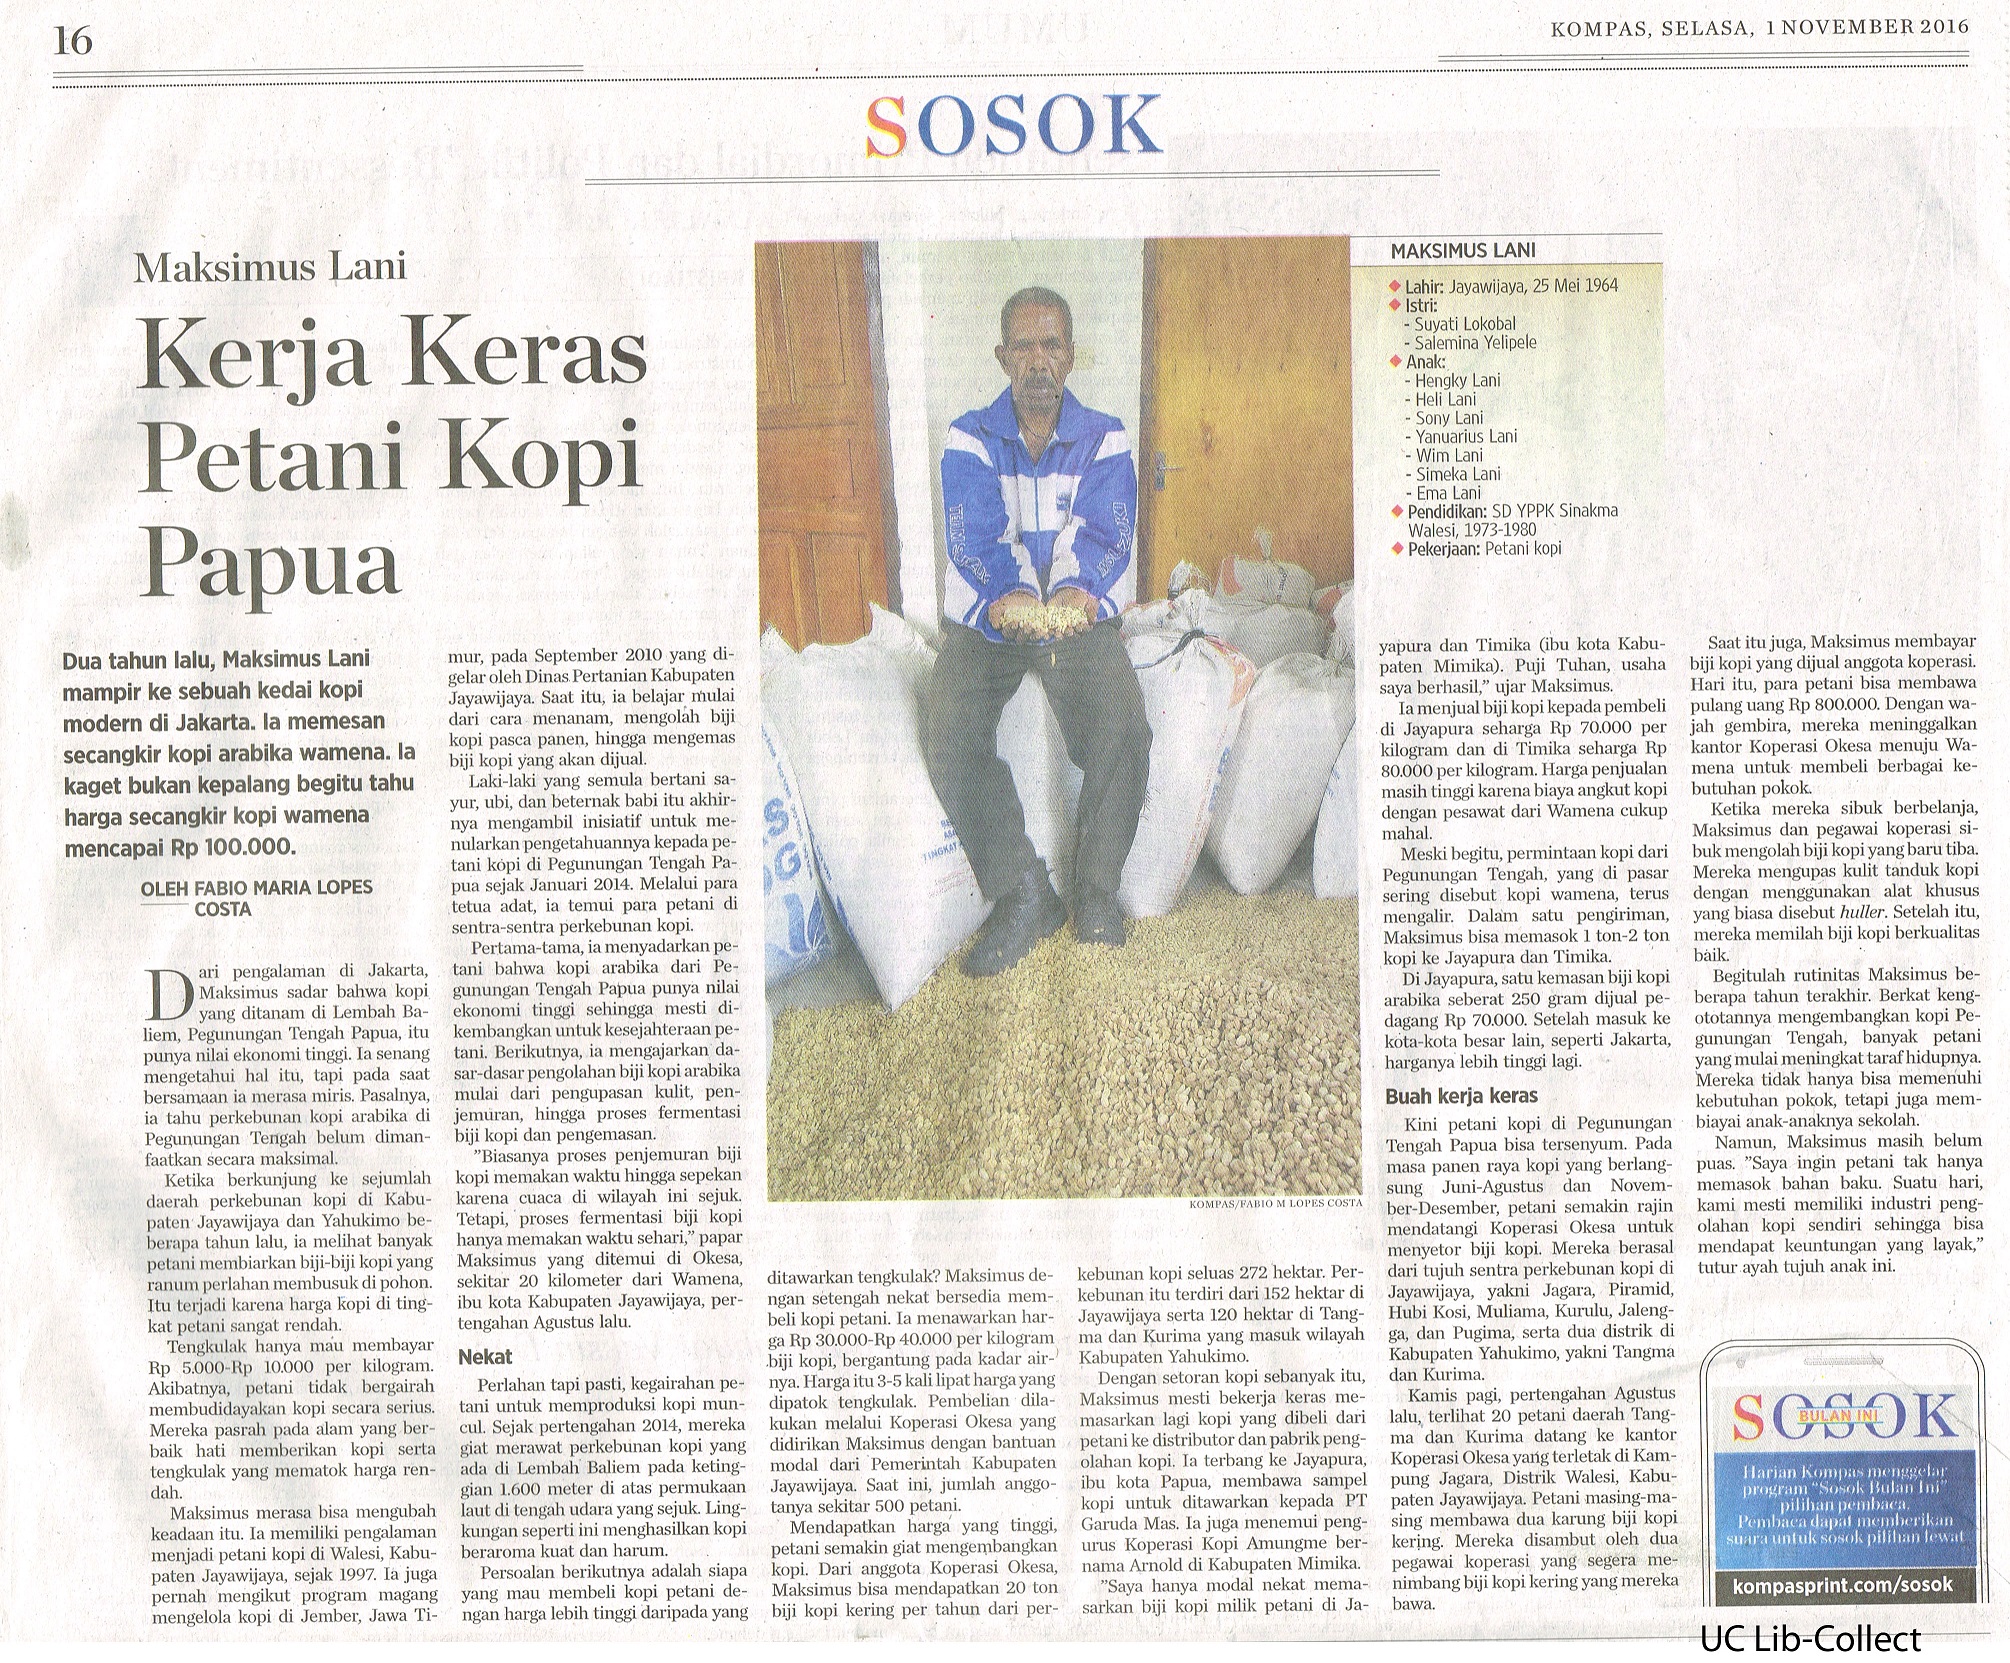 Kerja Keras Petani opi Papua. Kompas.1 November 2016.Hal.16